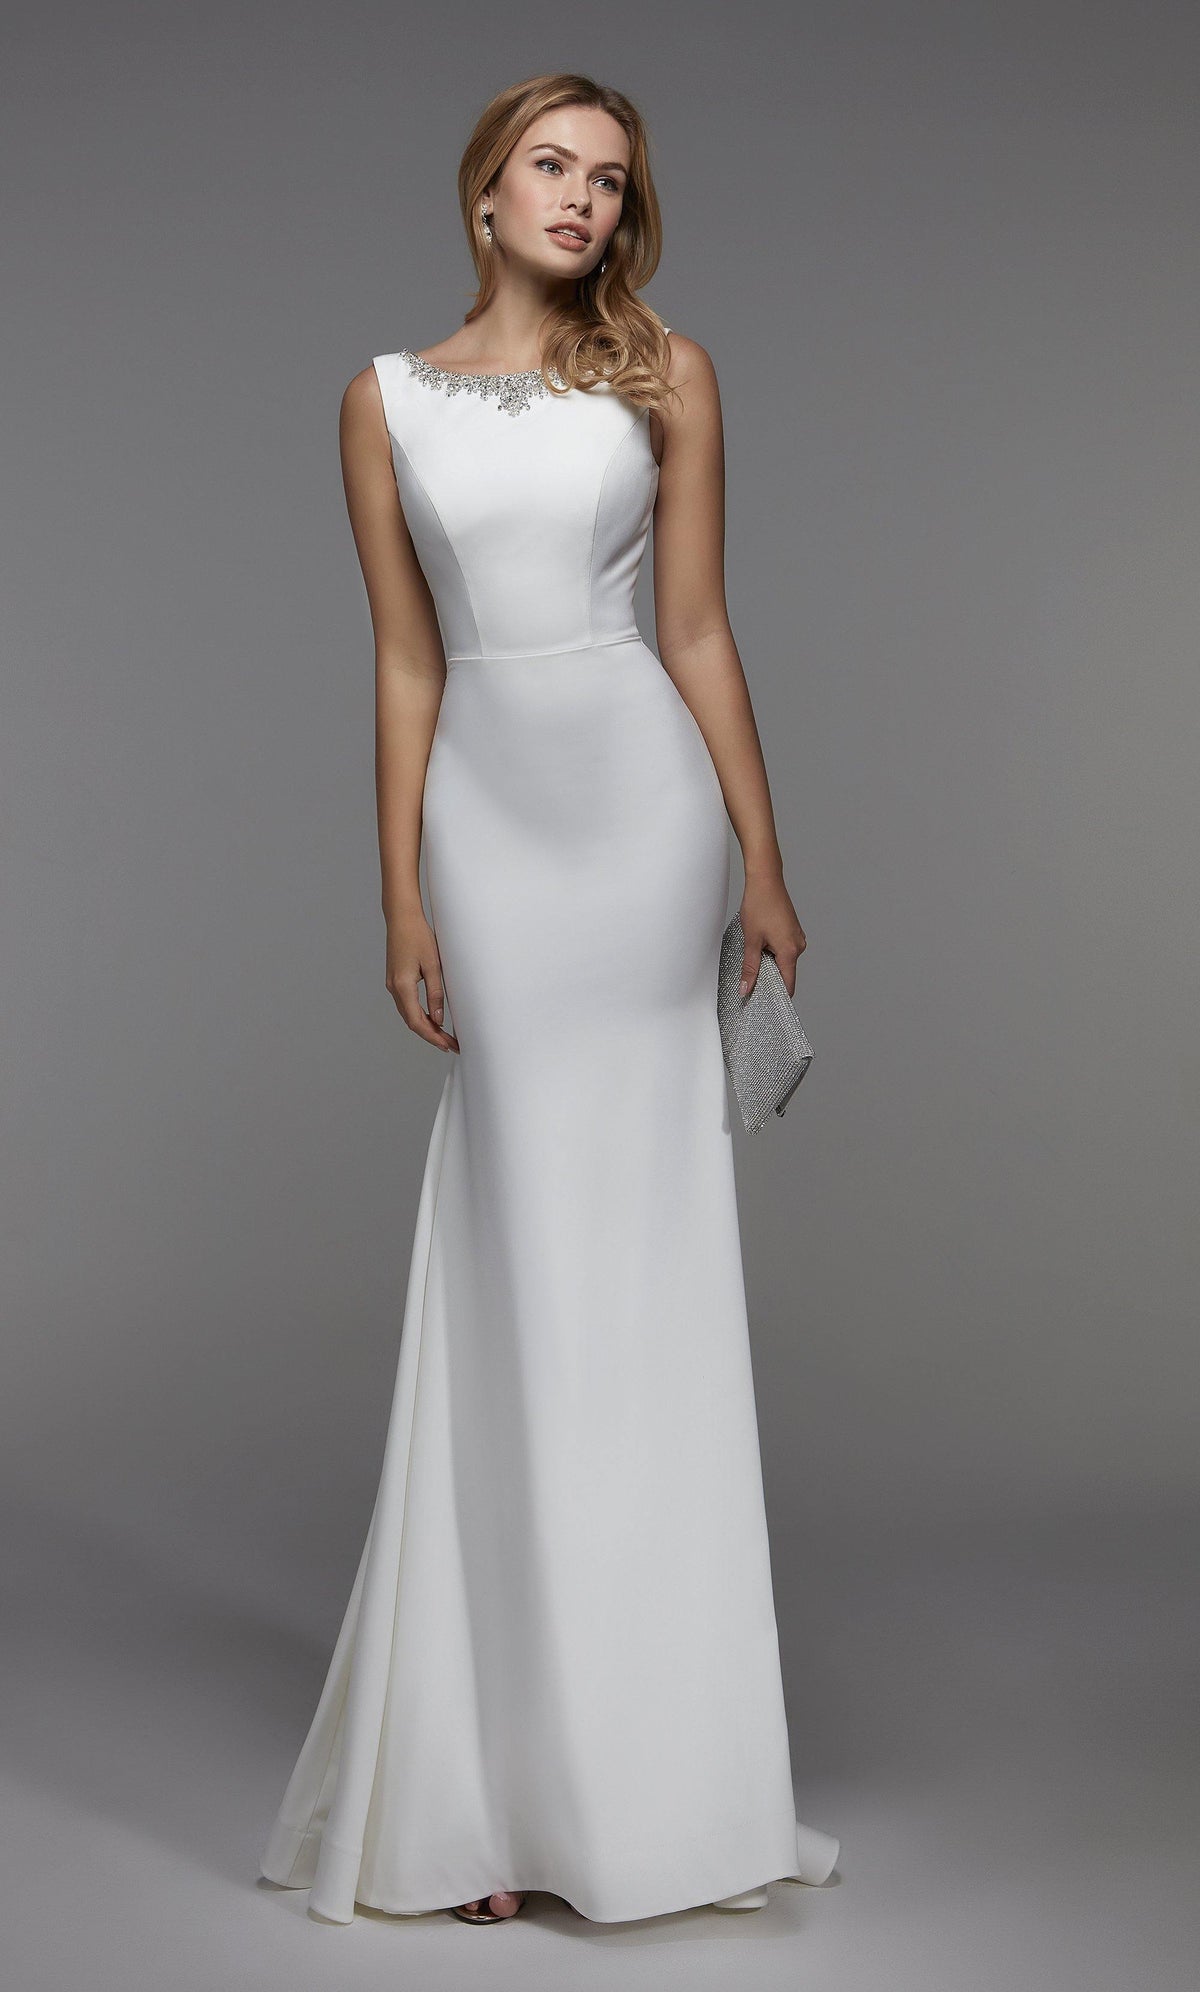 Formal Dress: 27538. Long Gala Dress, High Neck, Fit N Flare | Alyce Paris